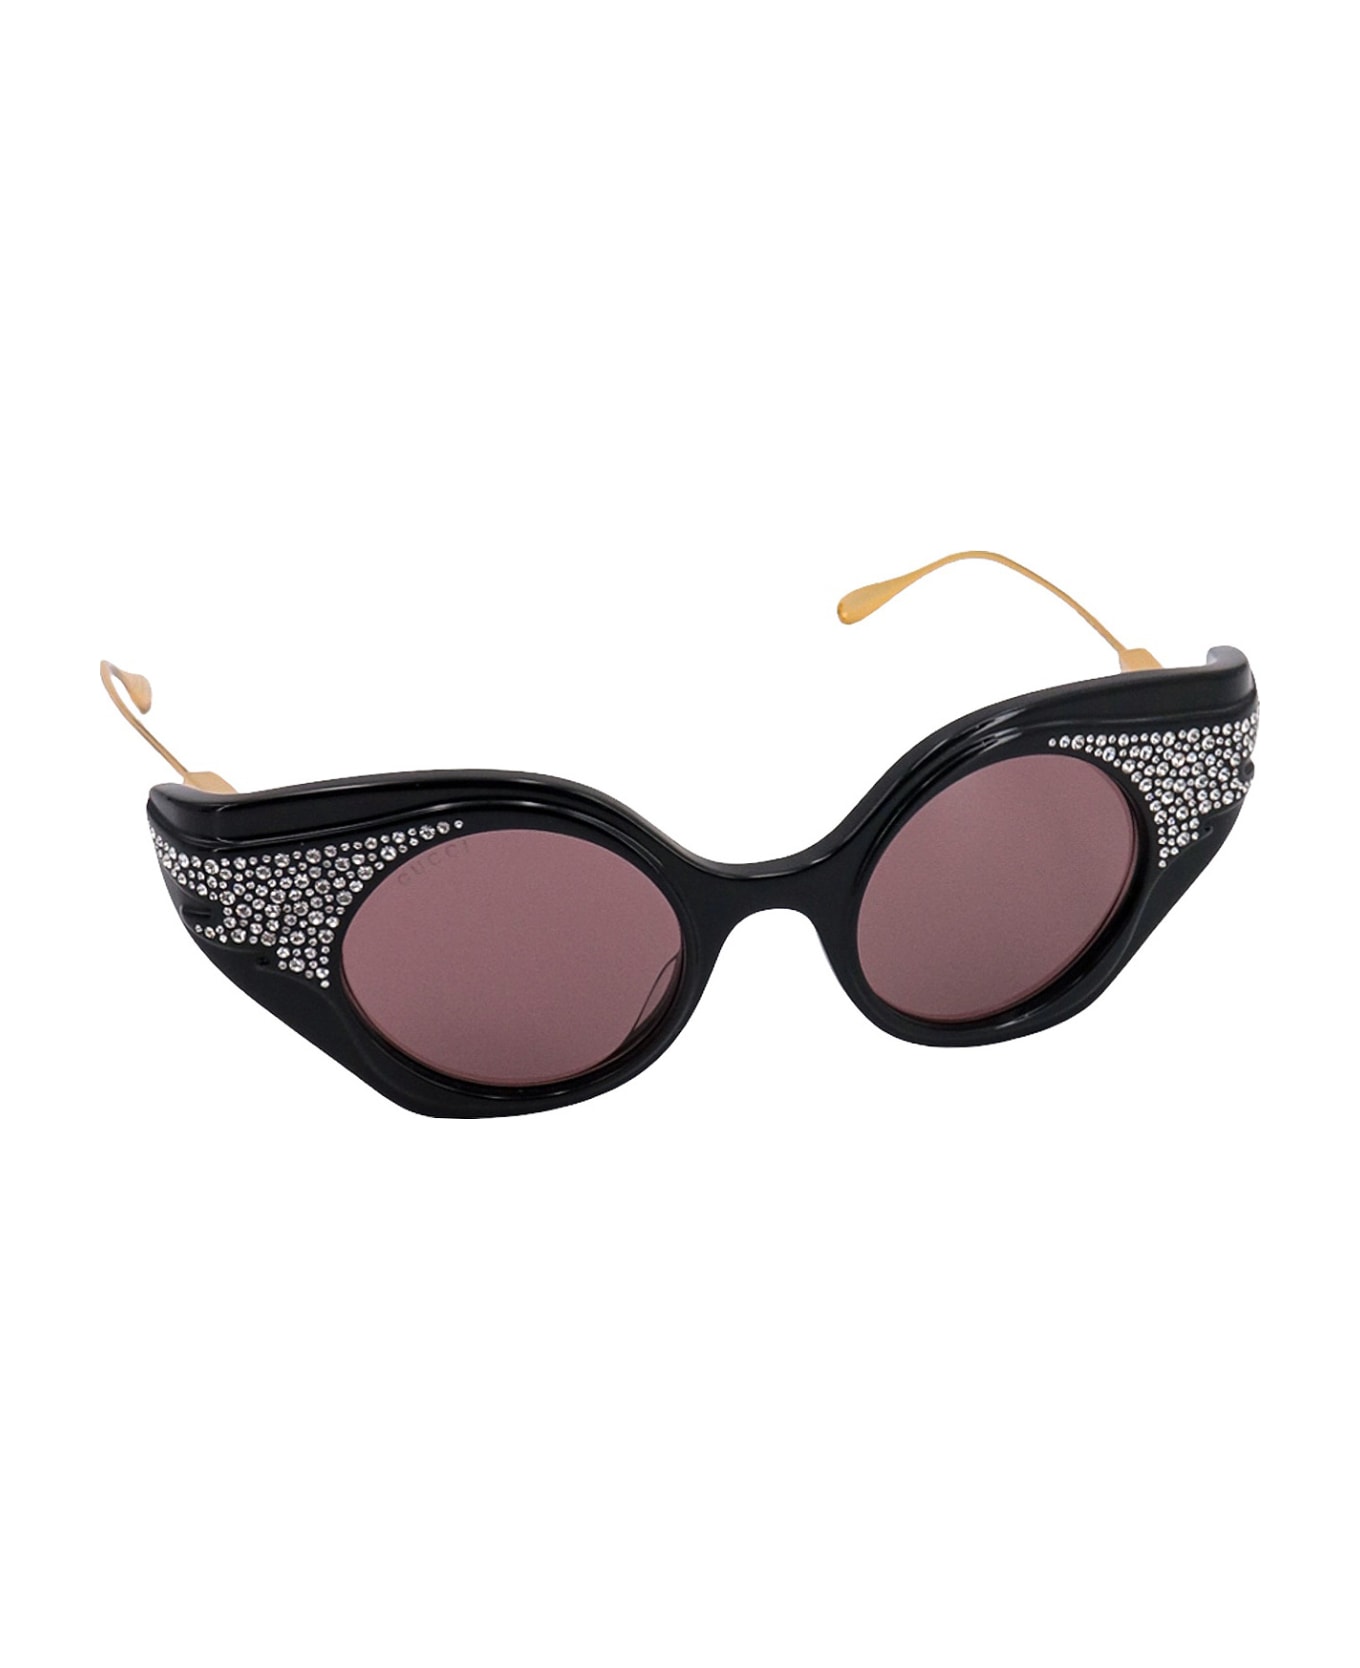 Gucci Eyewear Sunglasses - Black